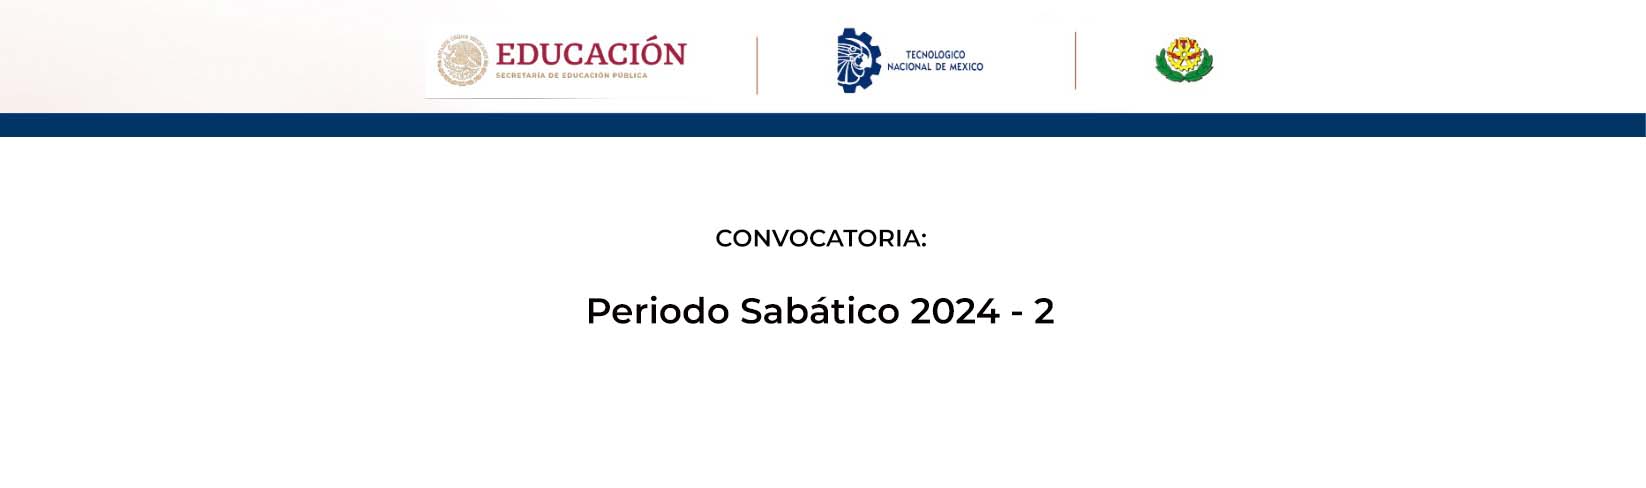 Convocatoria Periodo Sabático 2024 - 2